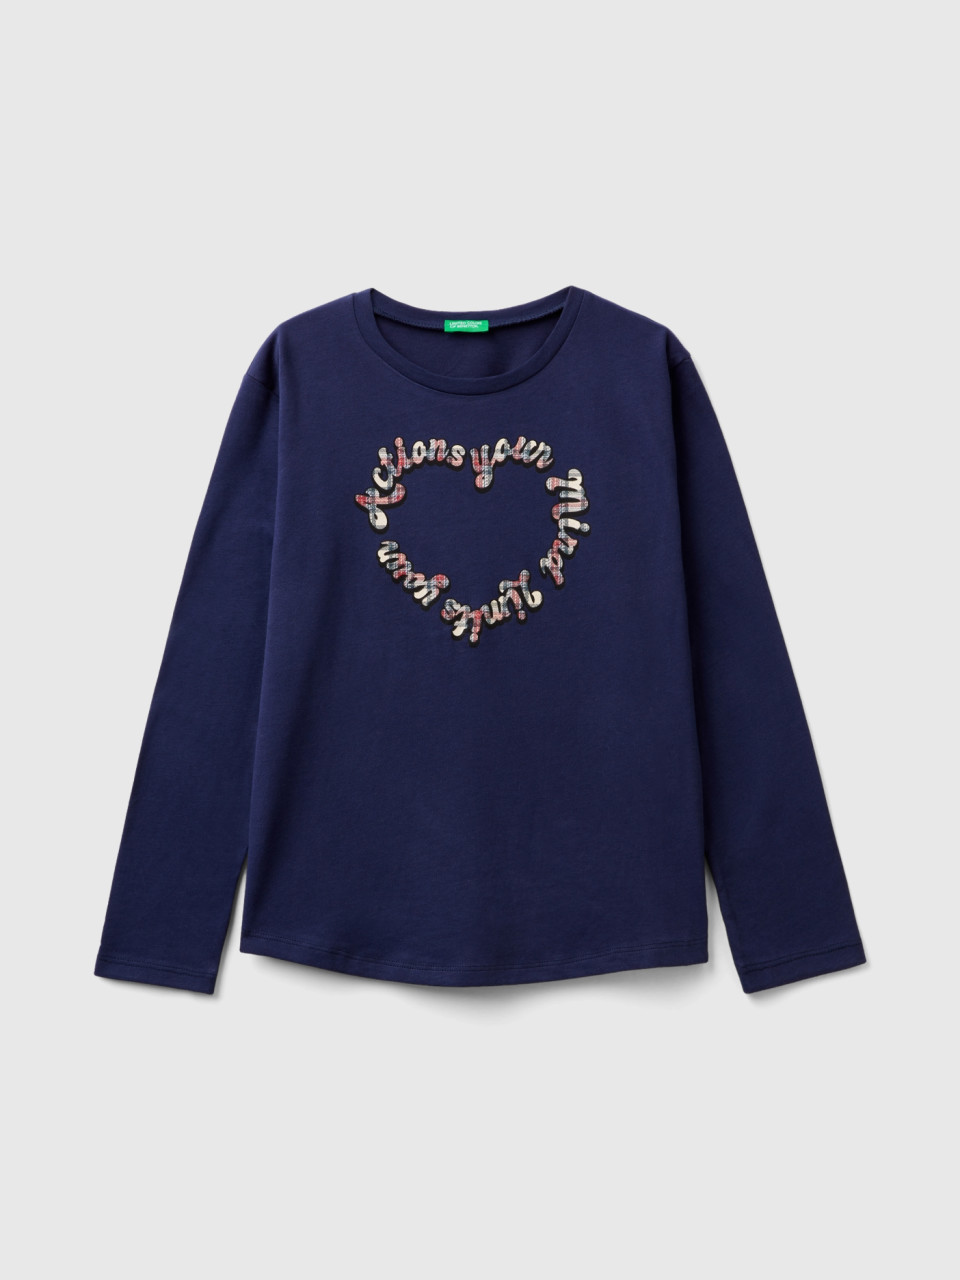 Benetton, Warm Cotton T-shirt With Glittery Print, Dark Blue, Kids